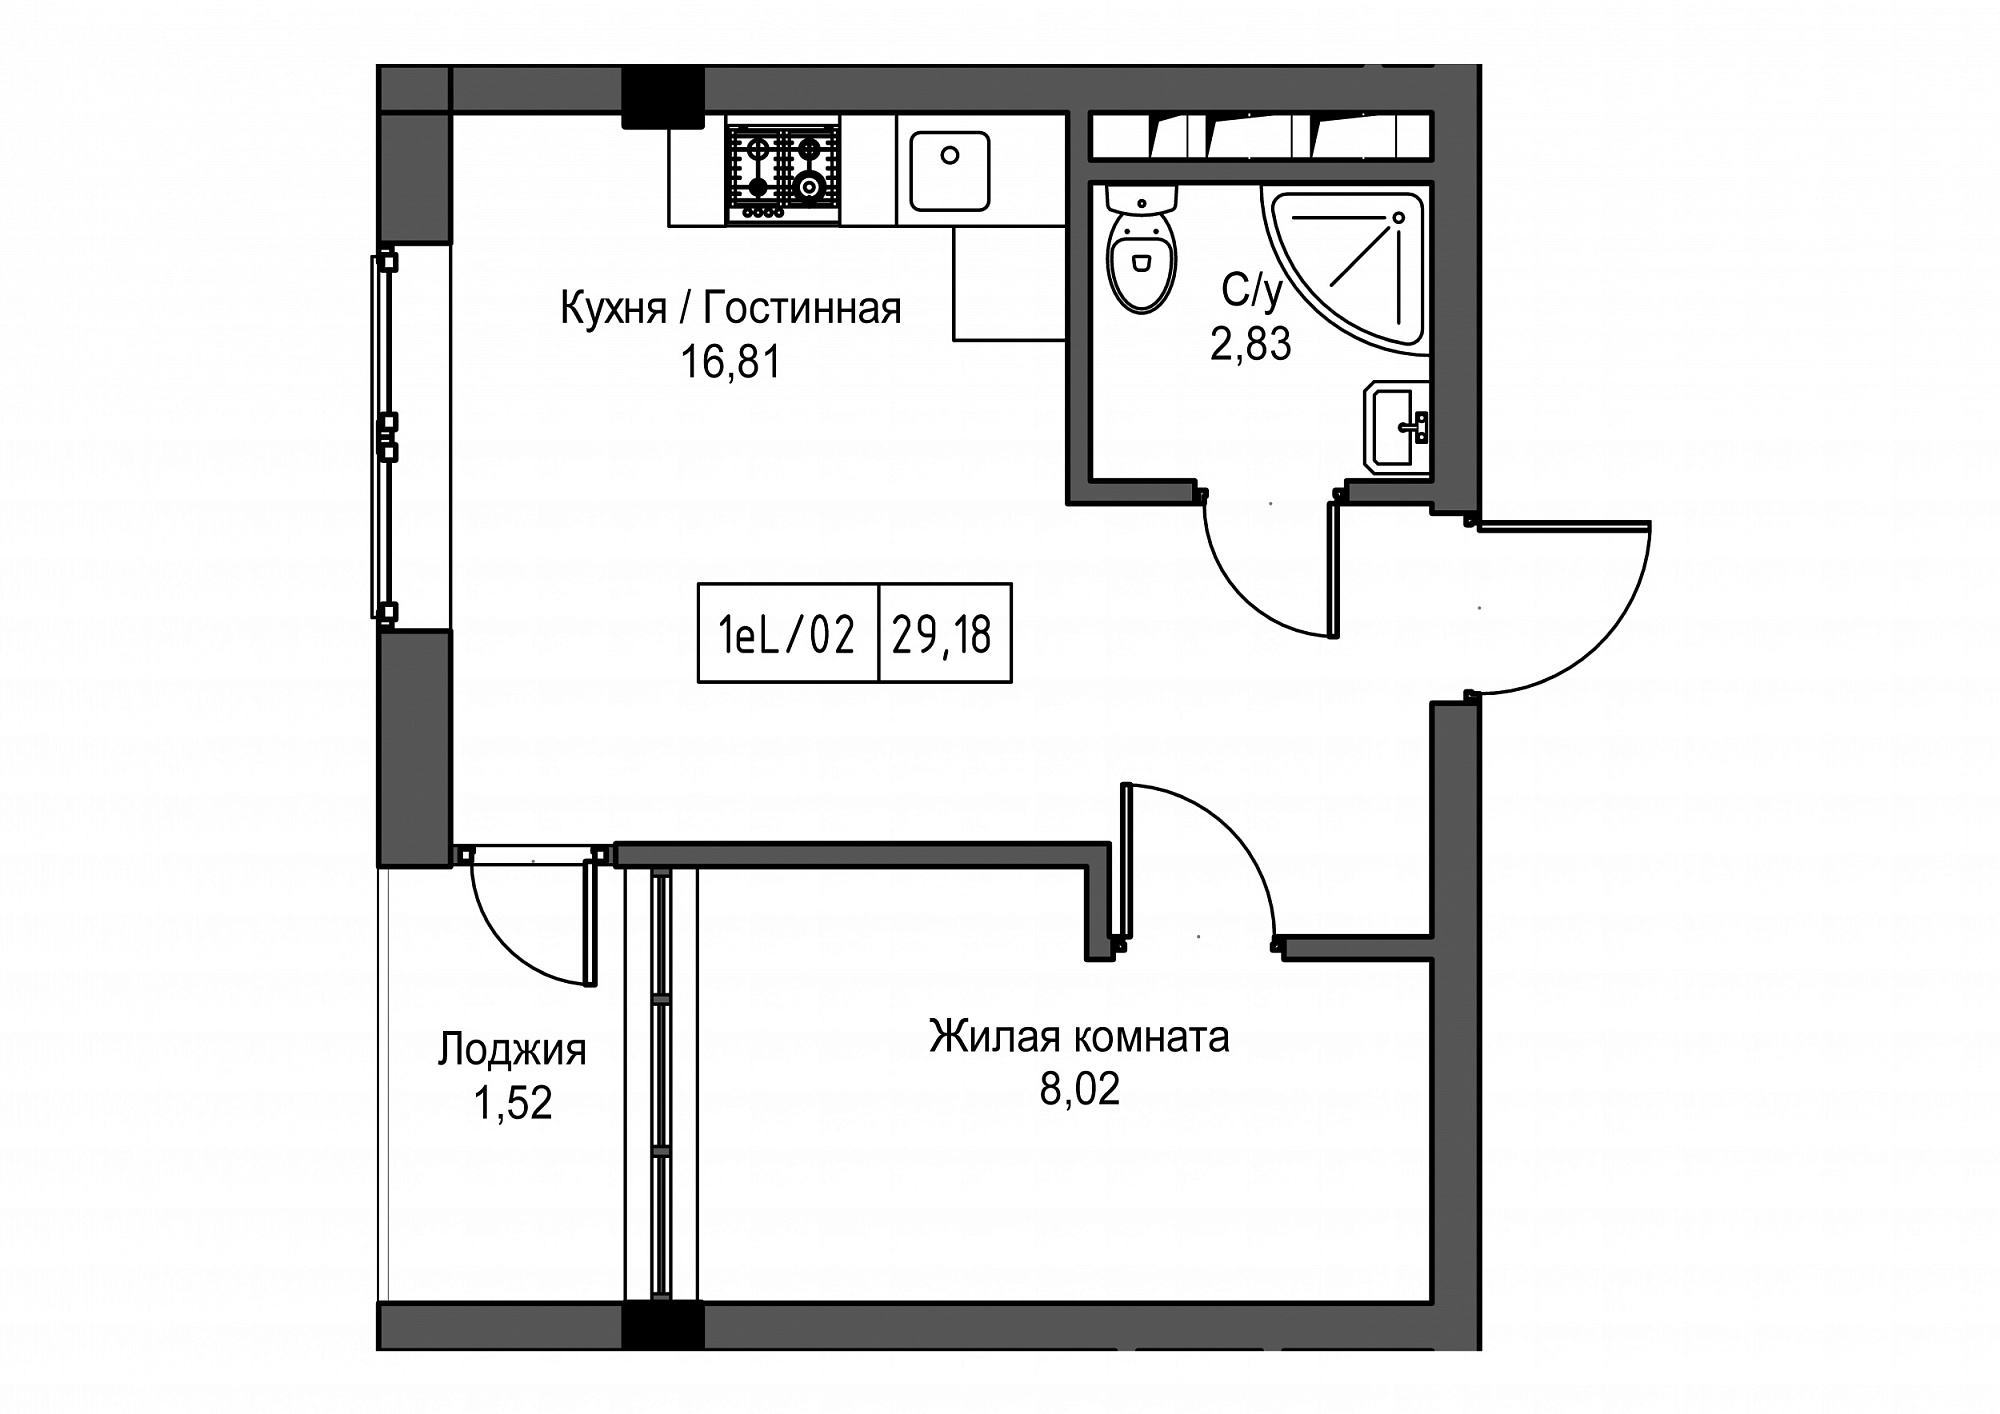 Планування 1-к квартира площею 29.18м2, UM-002-02/0096.